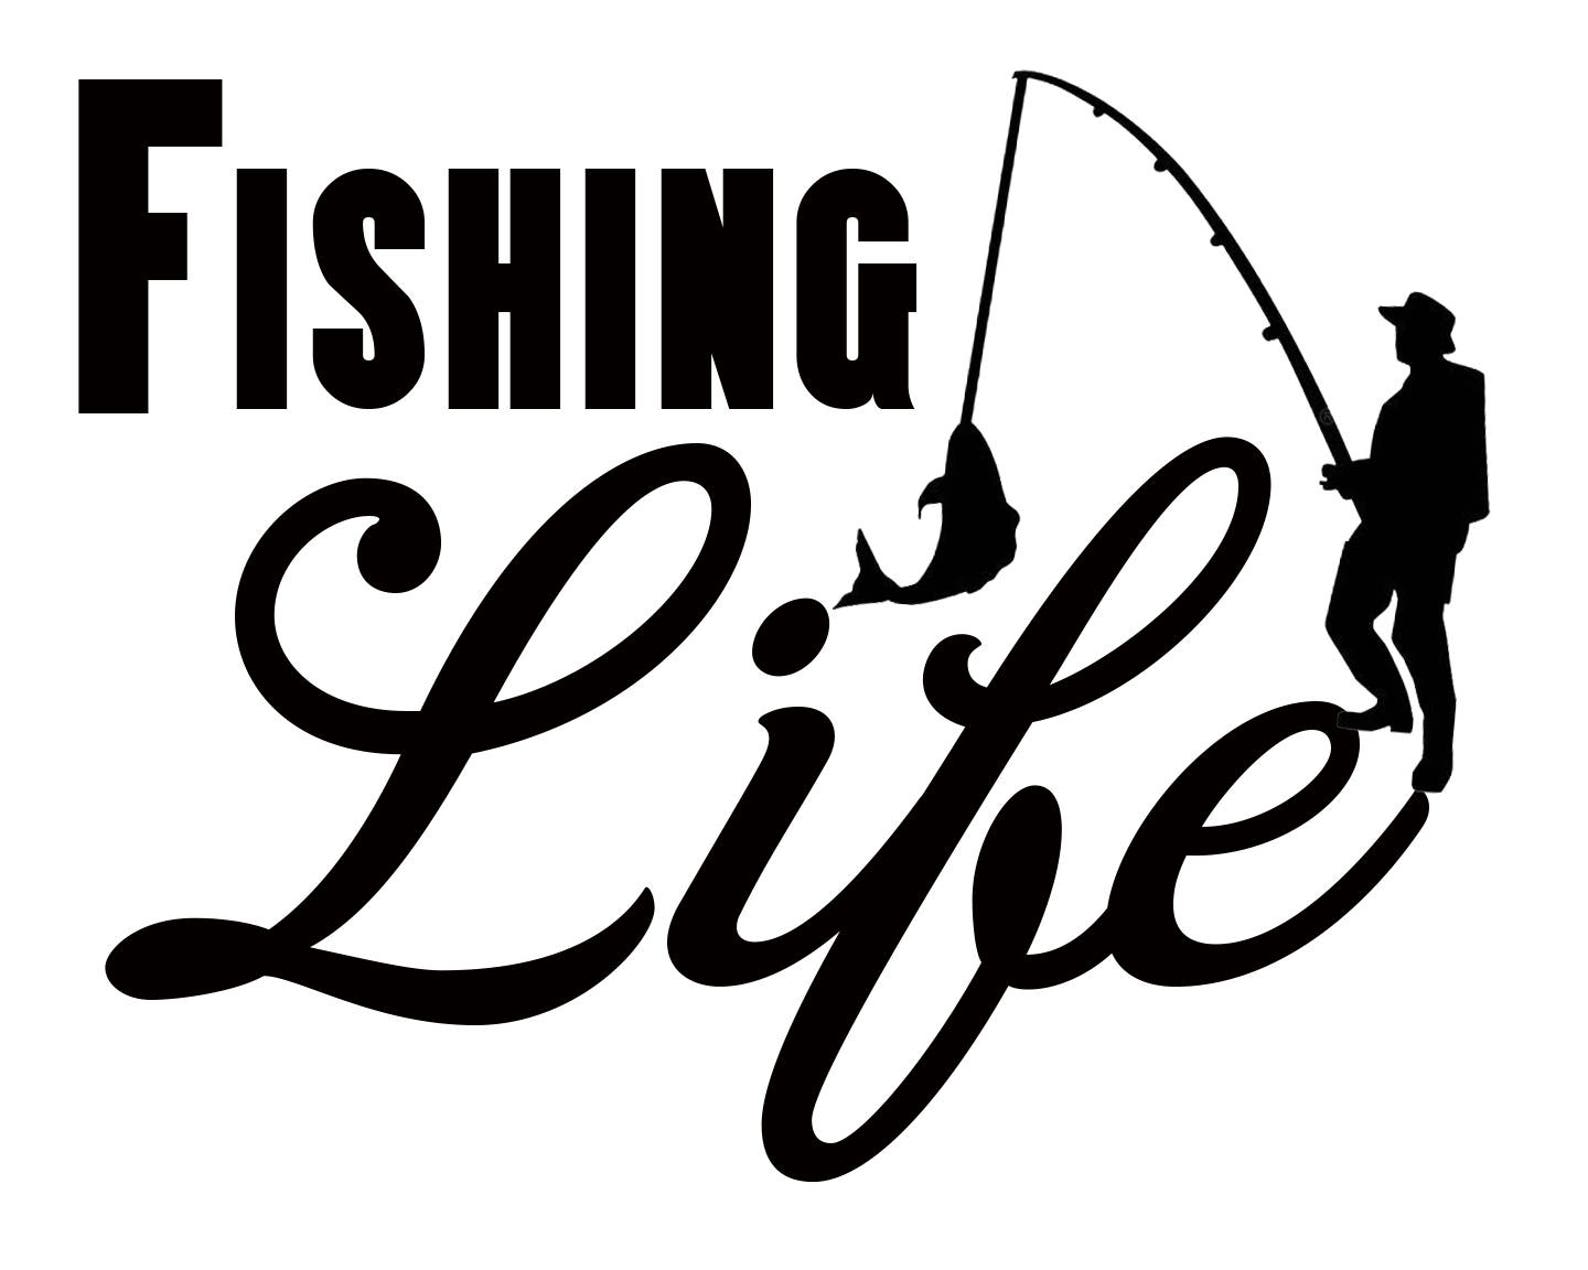 Fishing is life. Fishing надпись. Рыбацкие надписи. Логотип рыбалка. Фишинг лайф.